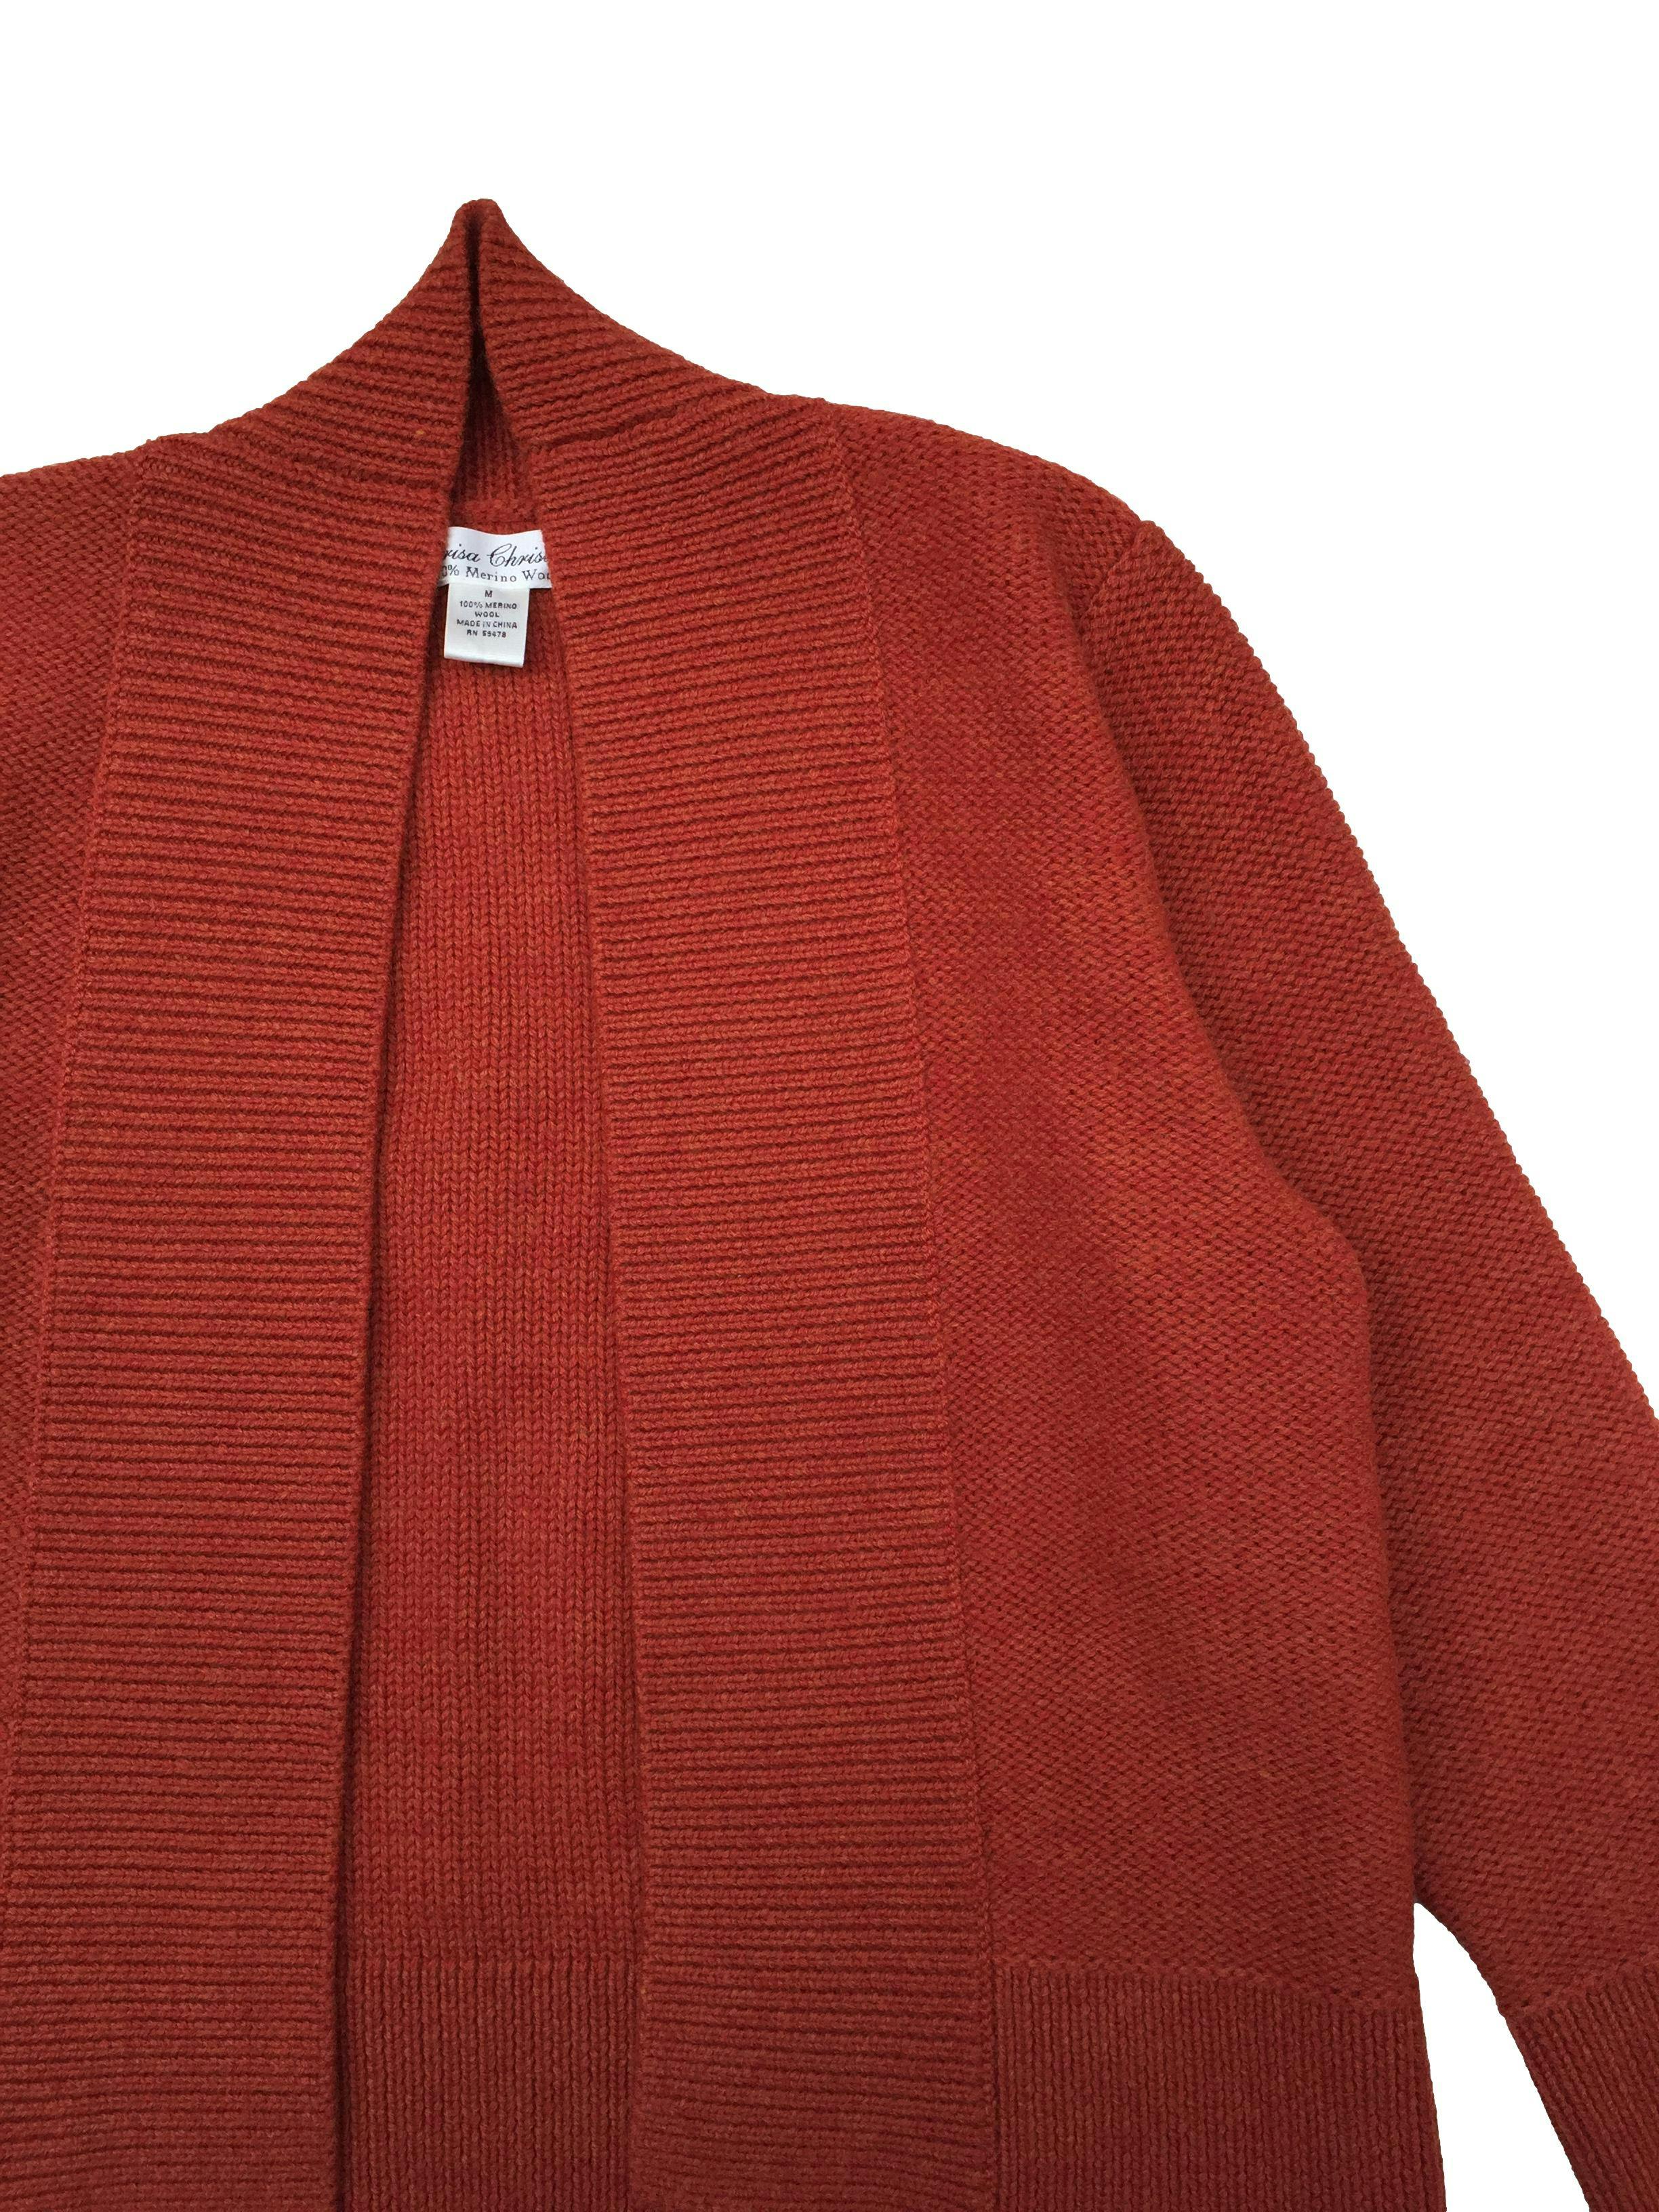 Cardigan naranja 100% lana merino, cierre mediante corchetes. Busto 110cm, Largo 51cm.